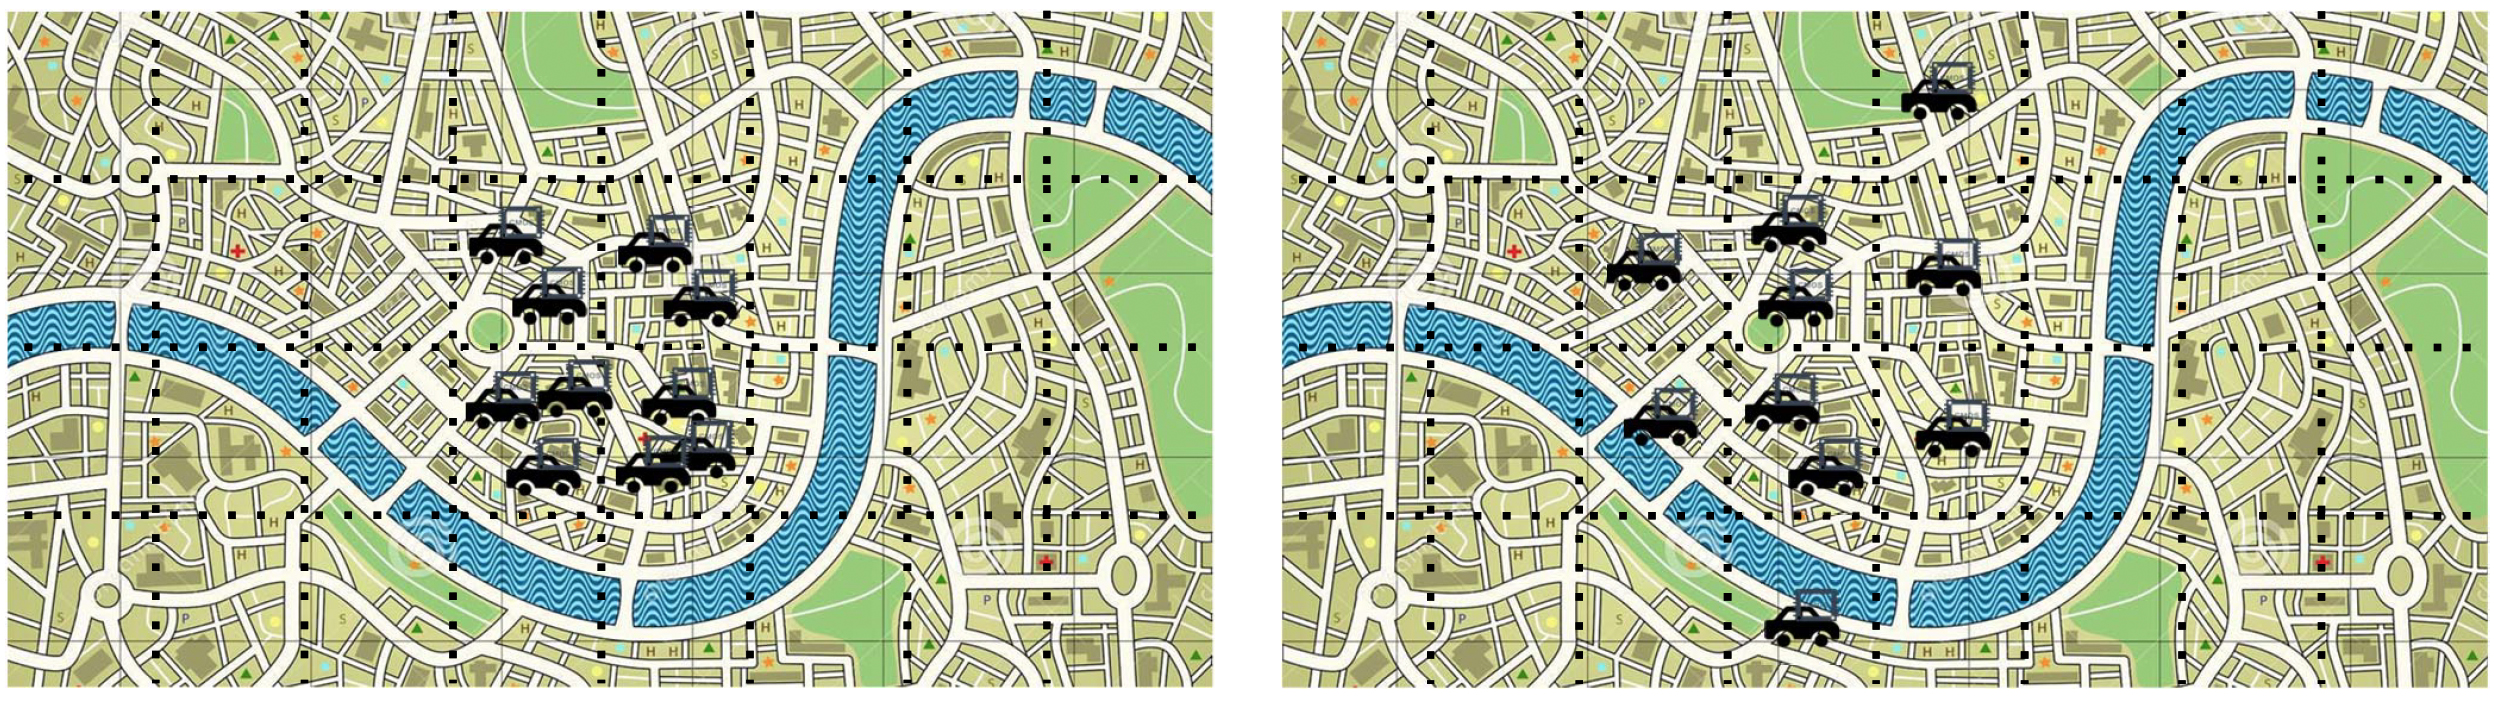 taxis-drive-smart-cities-creation-1920x540.jpg